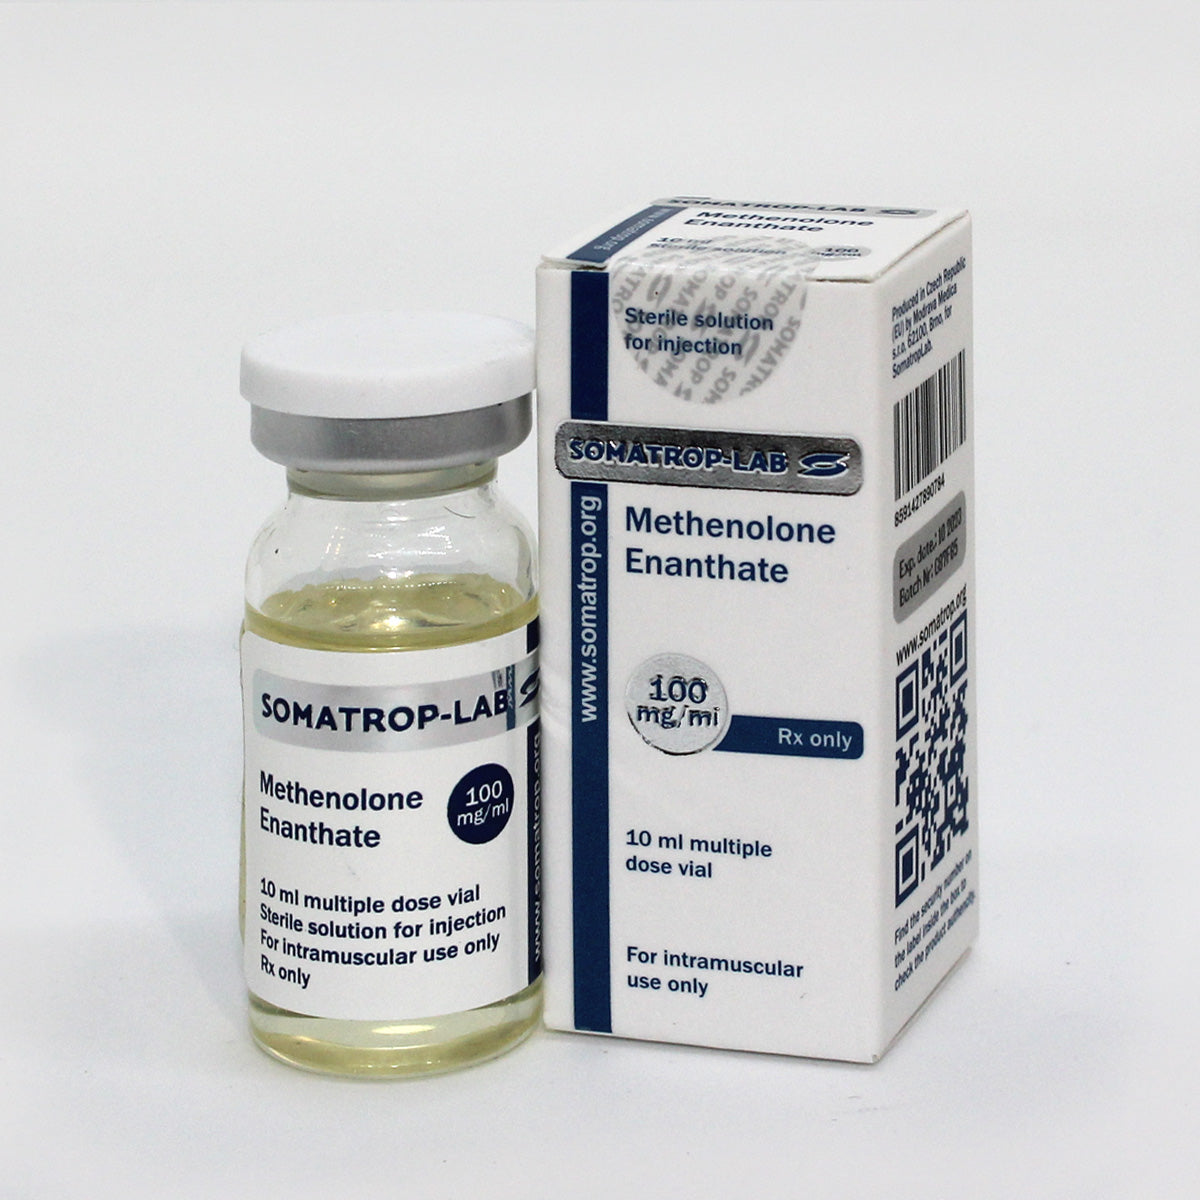 Somatrop-Lab Methenolone Enanthate 10ml/100mg/ml front packaging.